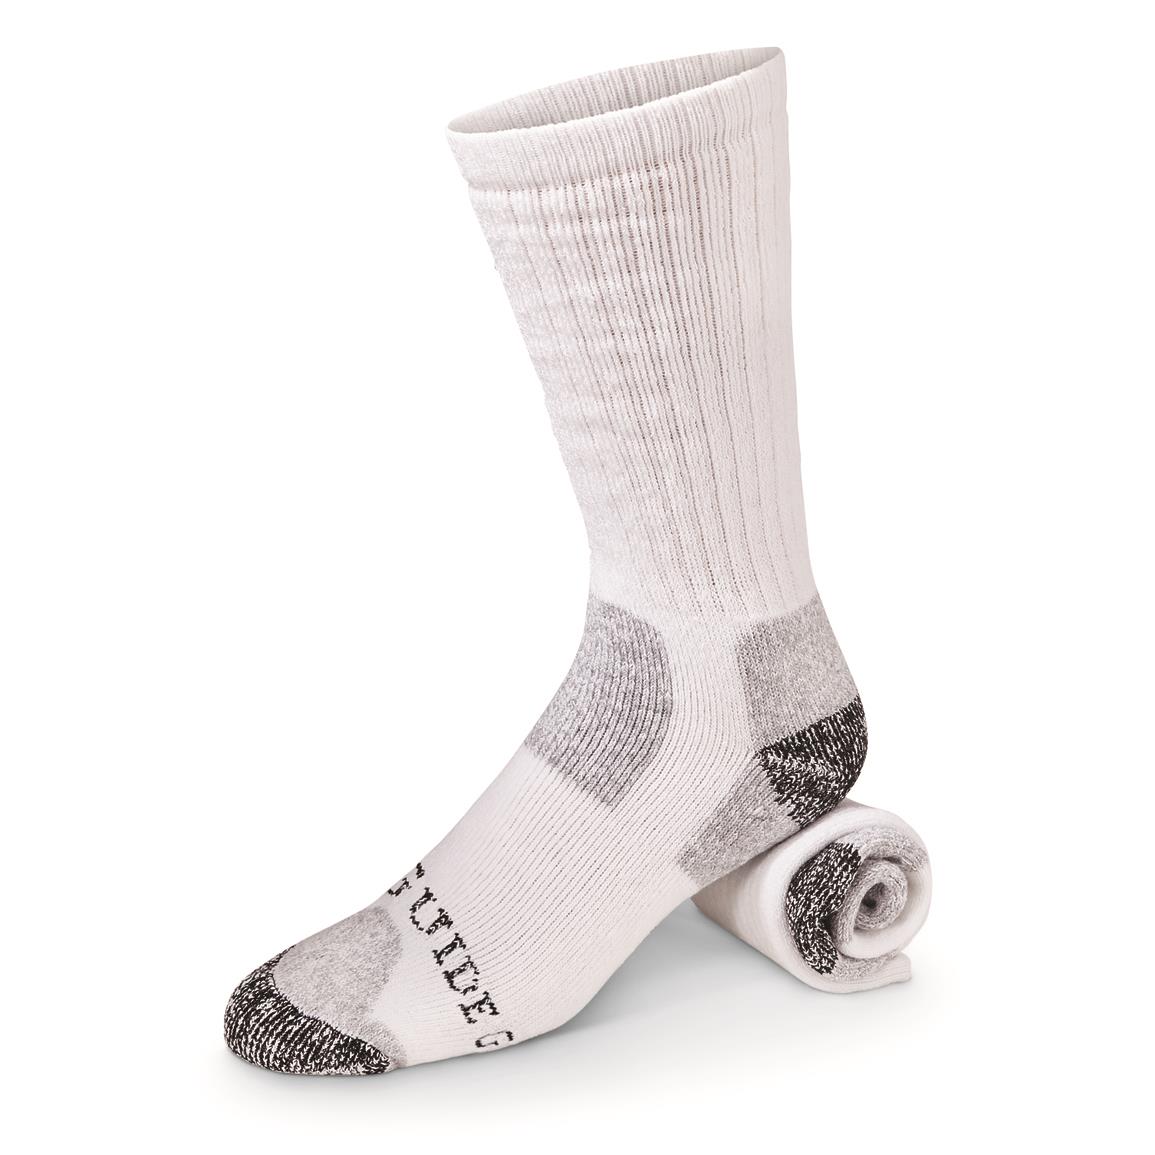 High Quality Men's Extreme Work Socks Safety Steel Toe Boot Work Socks Size6-11 